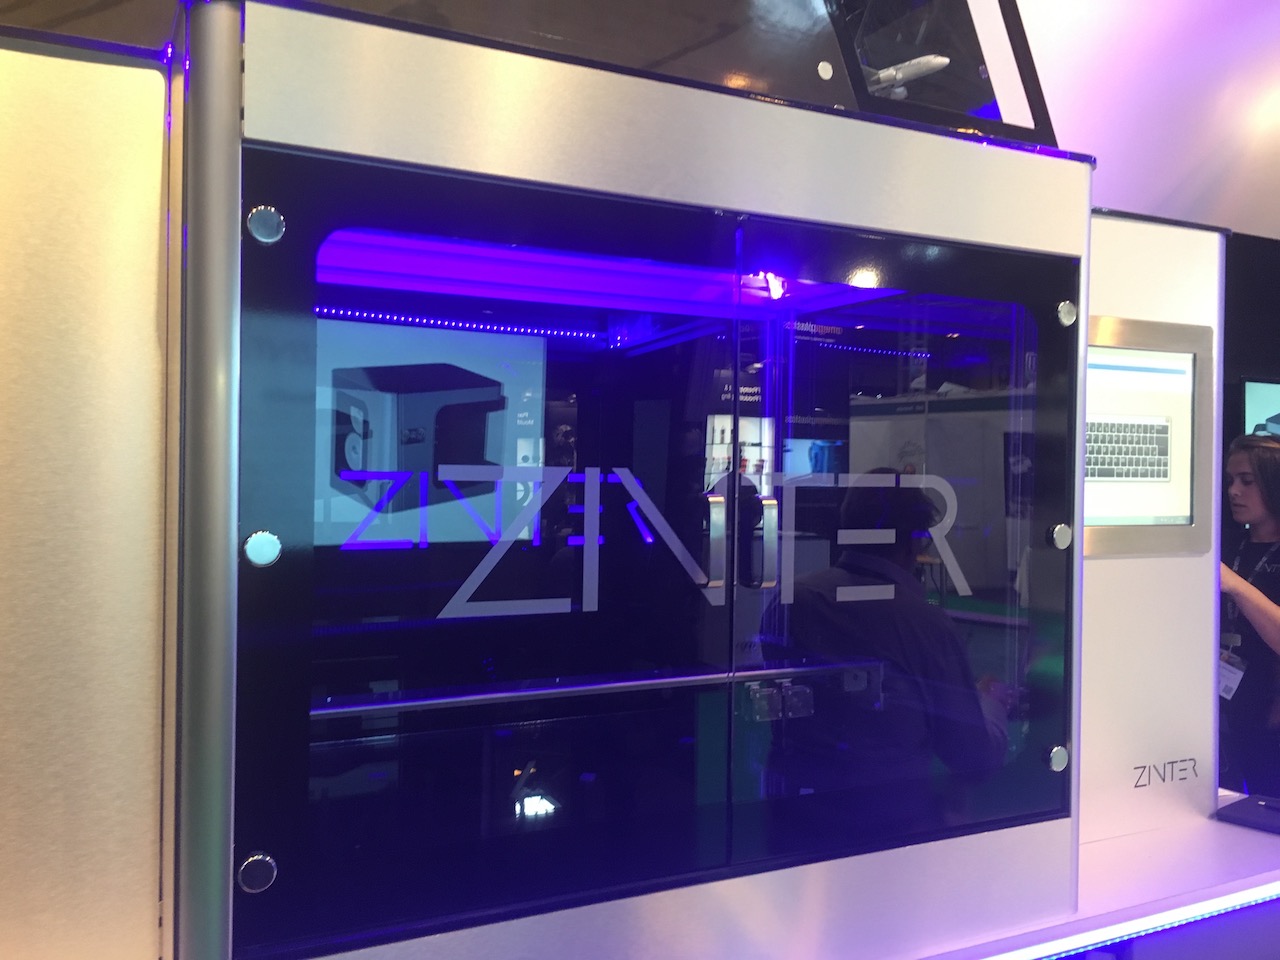  The Zinter Architect desktop 3D printer 